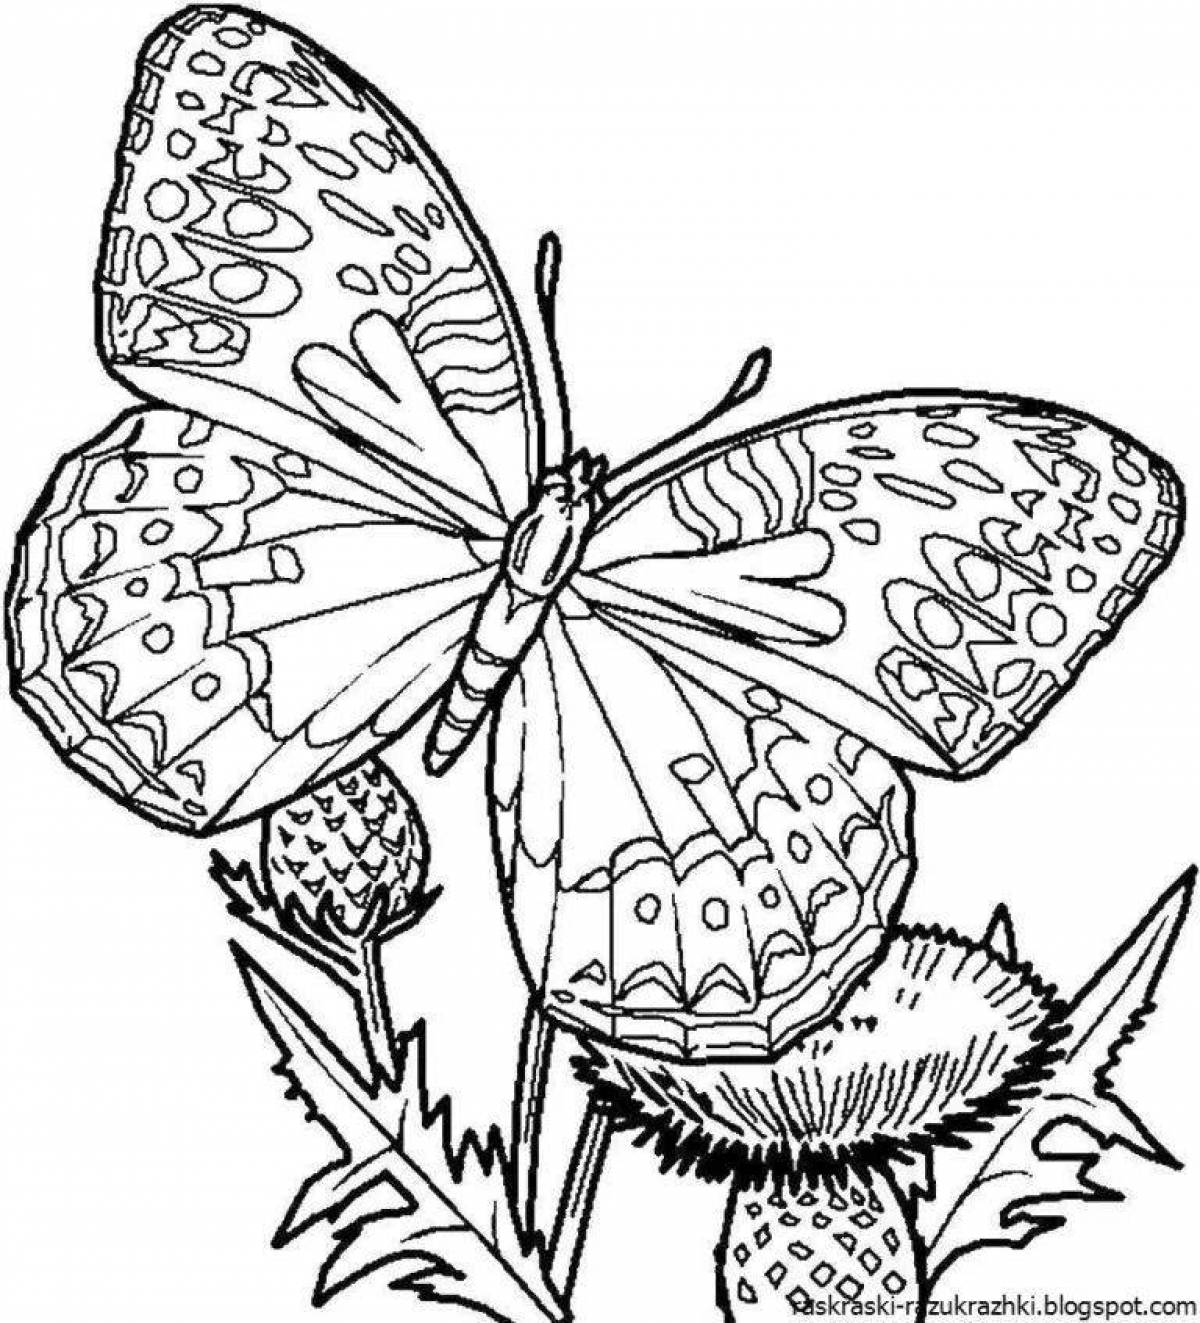 Раскрас черно. Раскраска "бабочки". Бабочка раскраска для детей. Раскраска для девочек бабочки. Раскраска насекомые бабочка.